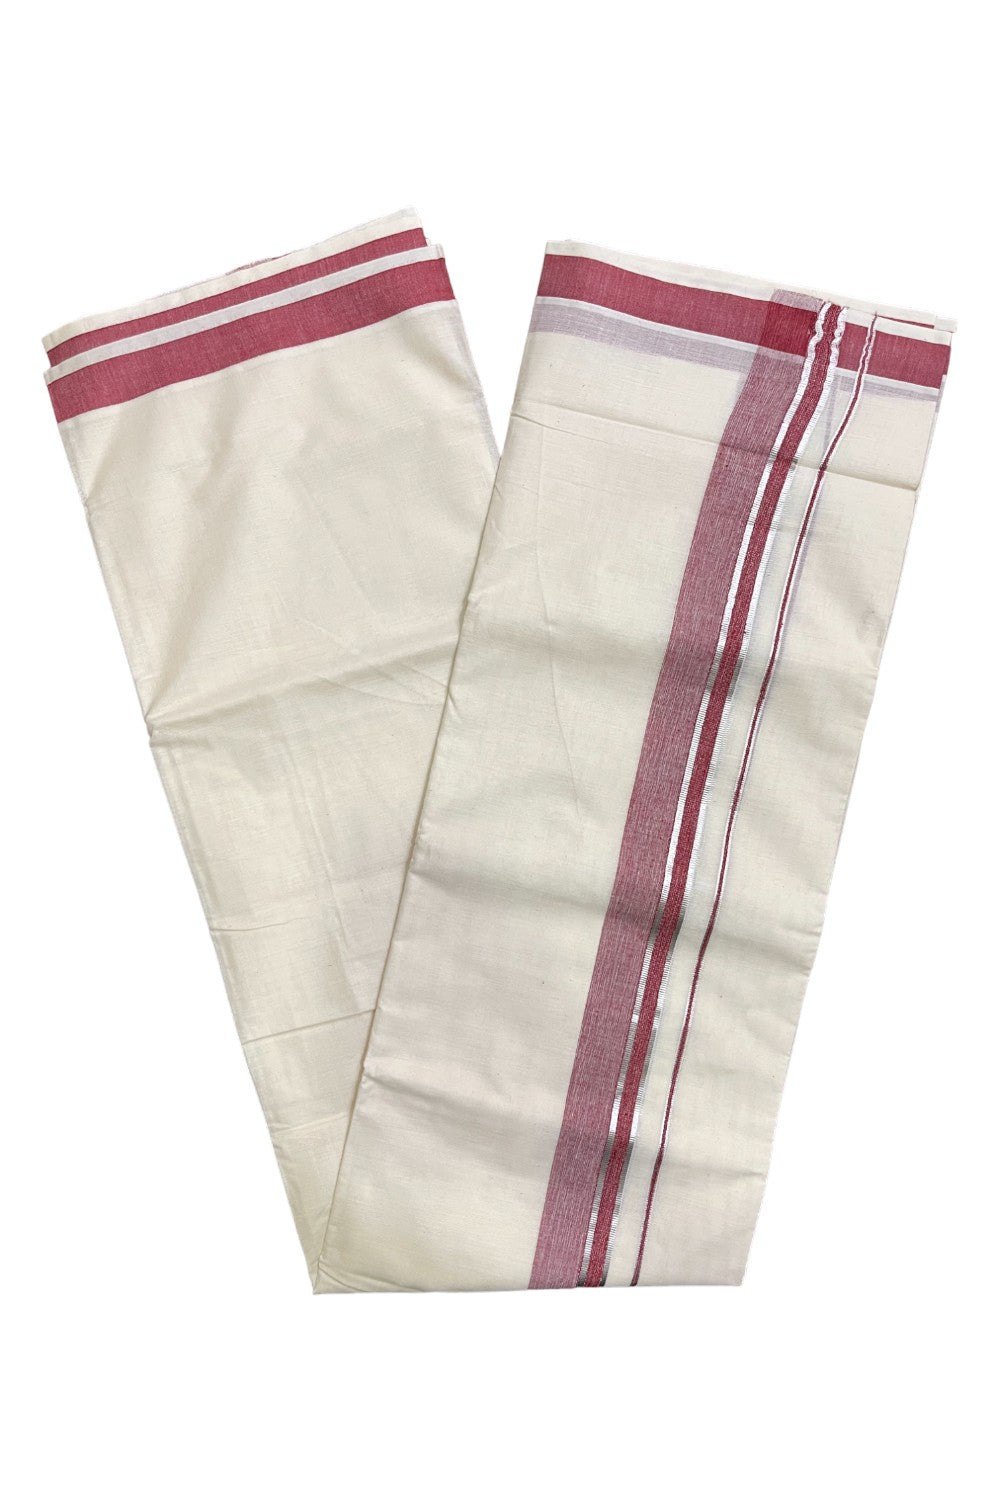 Kerala Pure Cotton Double Mundu with Silver Kasavu and Maroon Border (South Indian Kerala Dhoti)